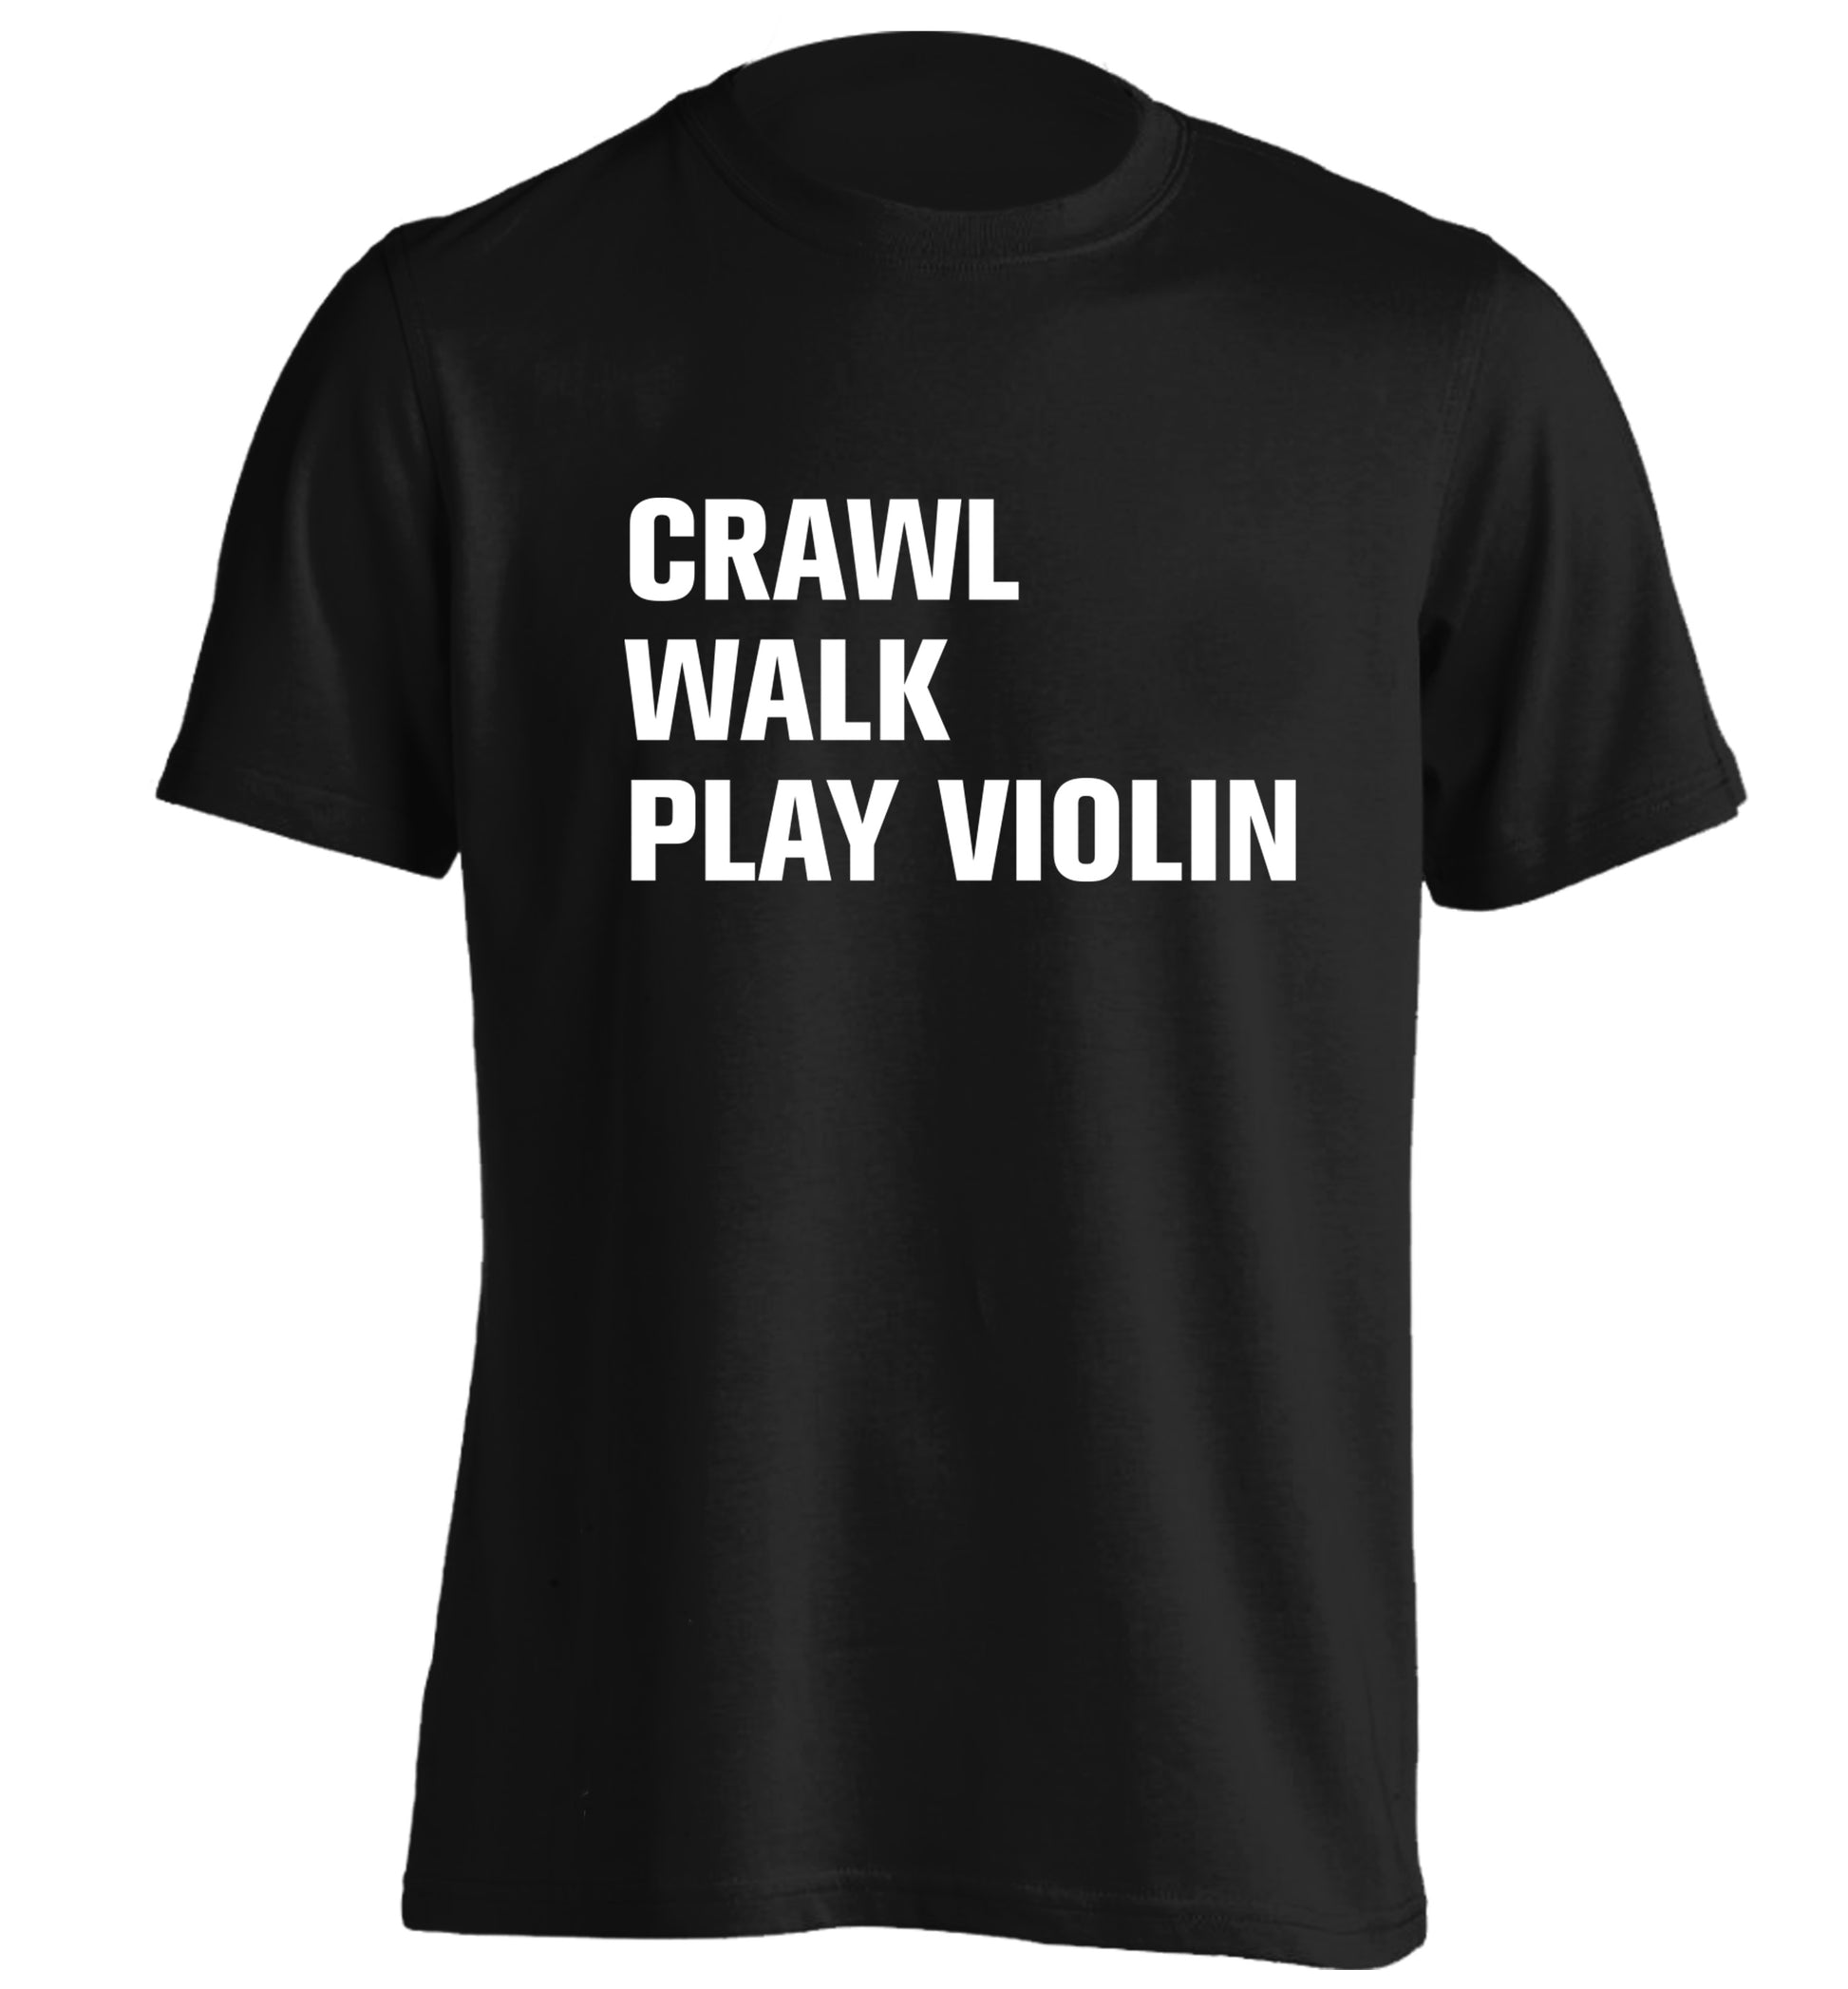 Crawl Walk Play Violin adults unisex black Tshirt 2XL